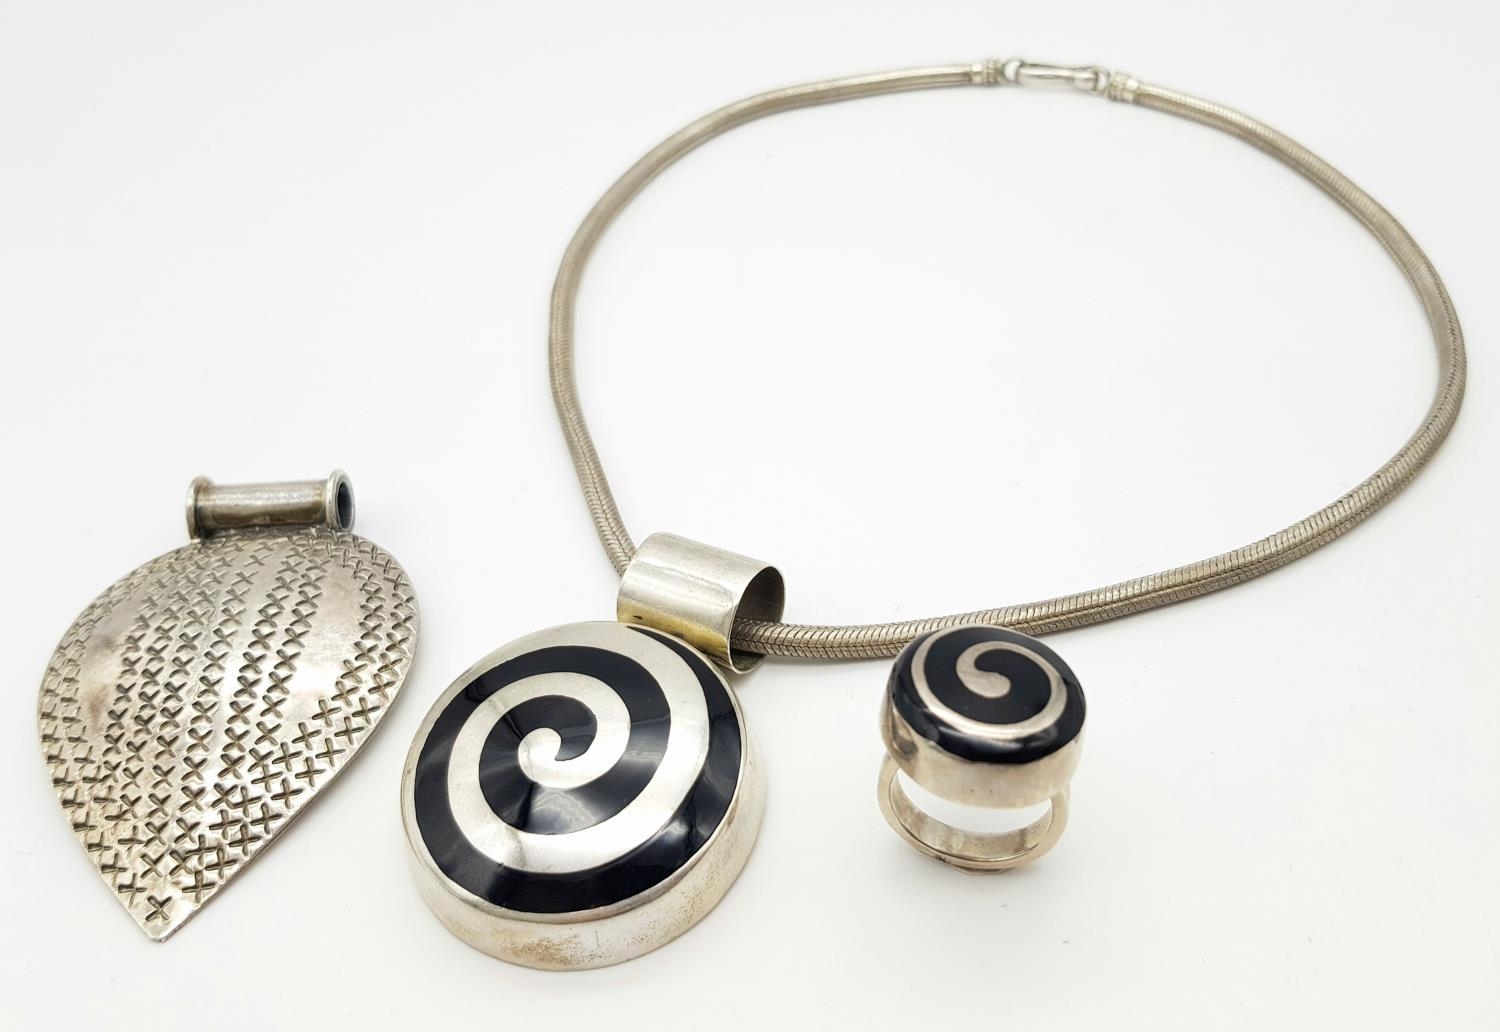 A Mexican silver bundle: Large pendant on 18" chain (pendant: 7cm x 5cm), plus silver and enamel